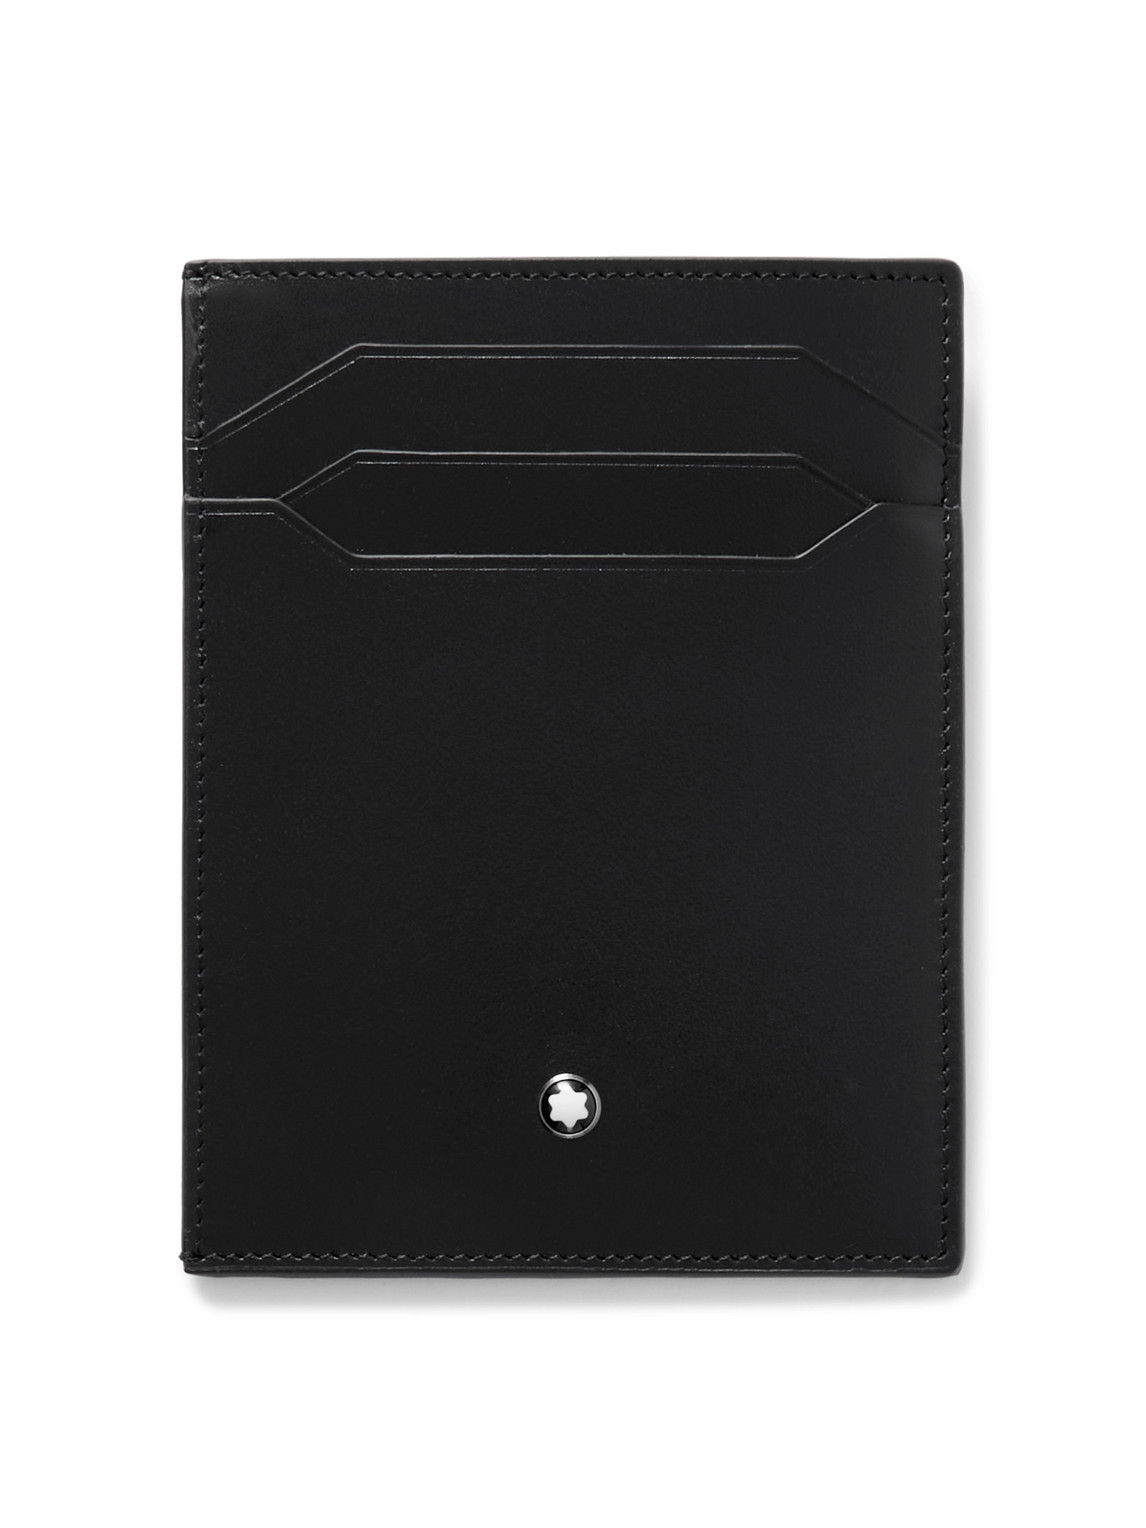 Montblanc Meisterstück Leather Cardholder In Black